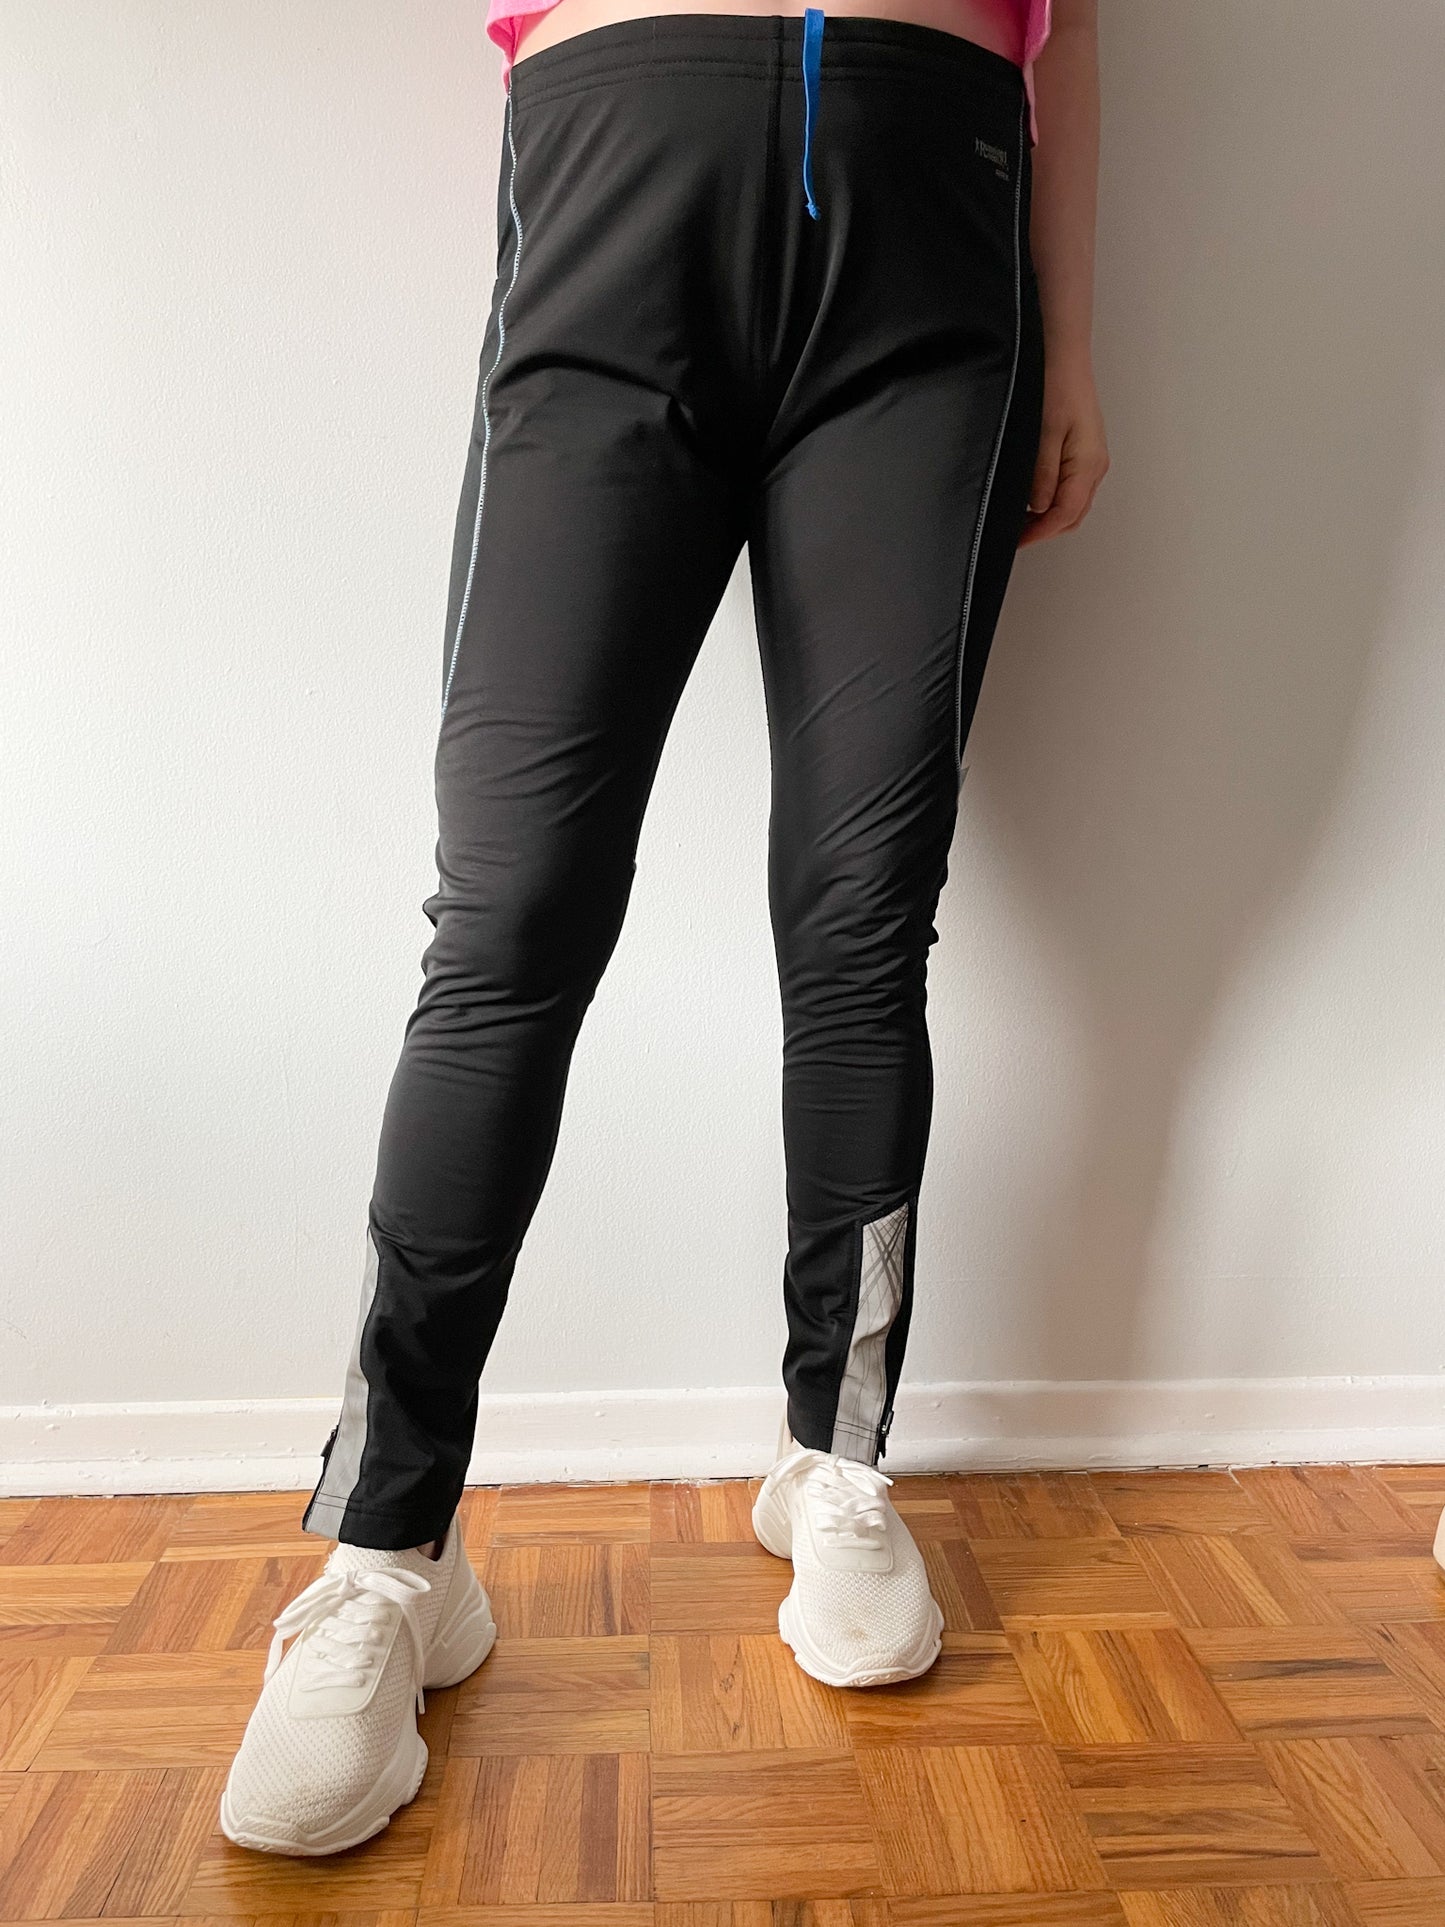 Running Room Black High Rise Black Reflective Zipper Ankle Running Pants - Medium